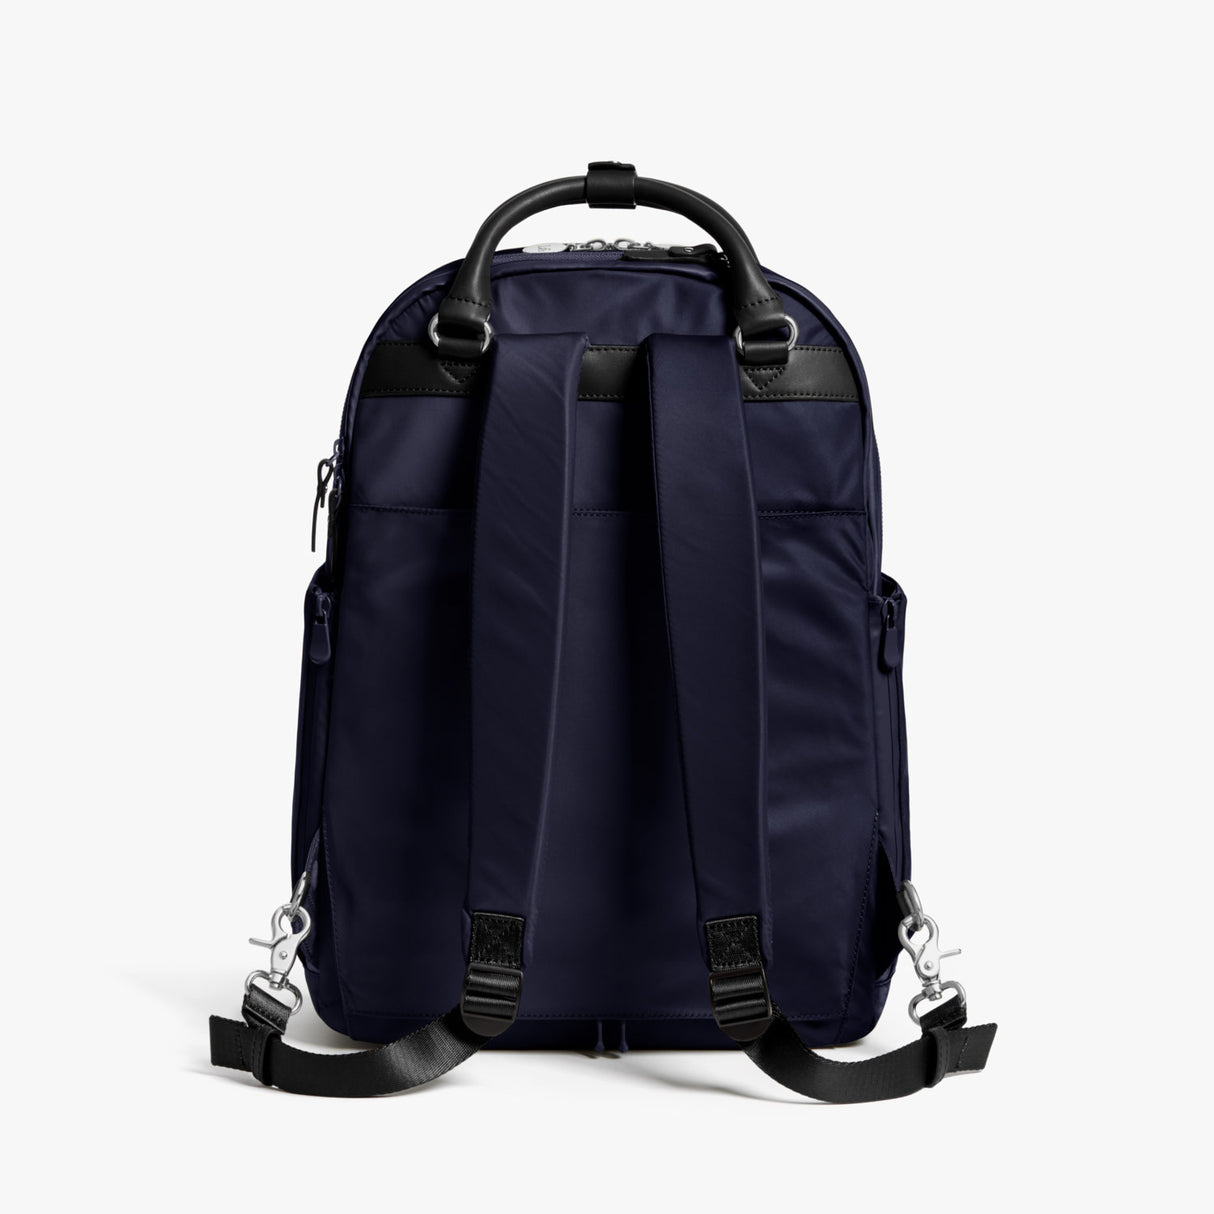 The Rowledge - Womens Laptop Backpack - Black/Gold/Lavender in Nylon ...